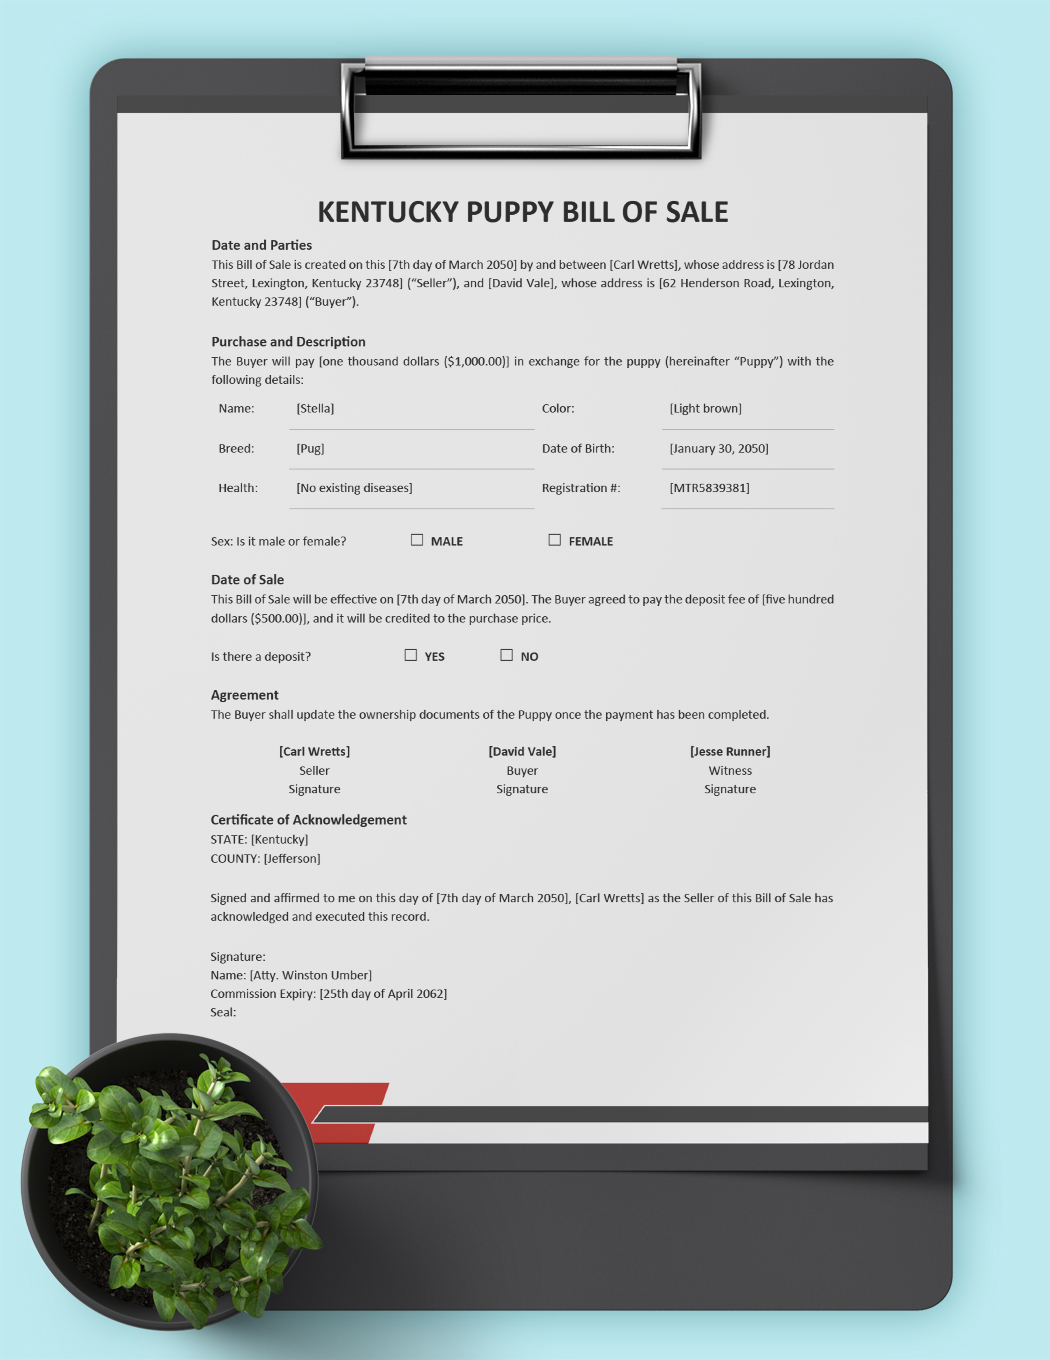 Kentucky Dog / Puppy Bill of Sale Form Template